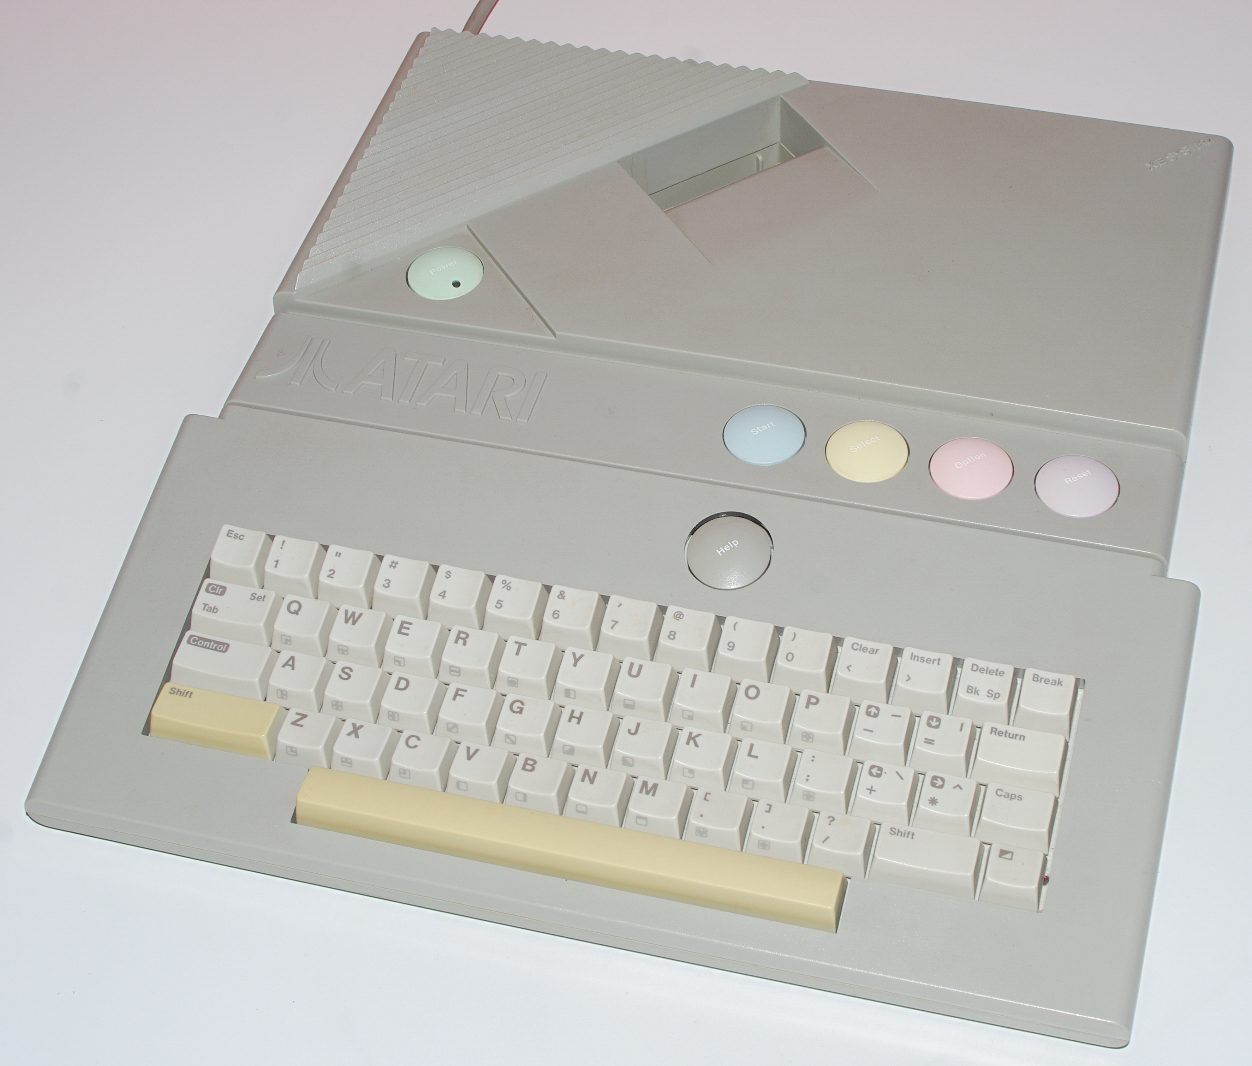 Atari XE System